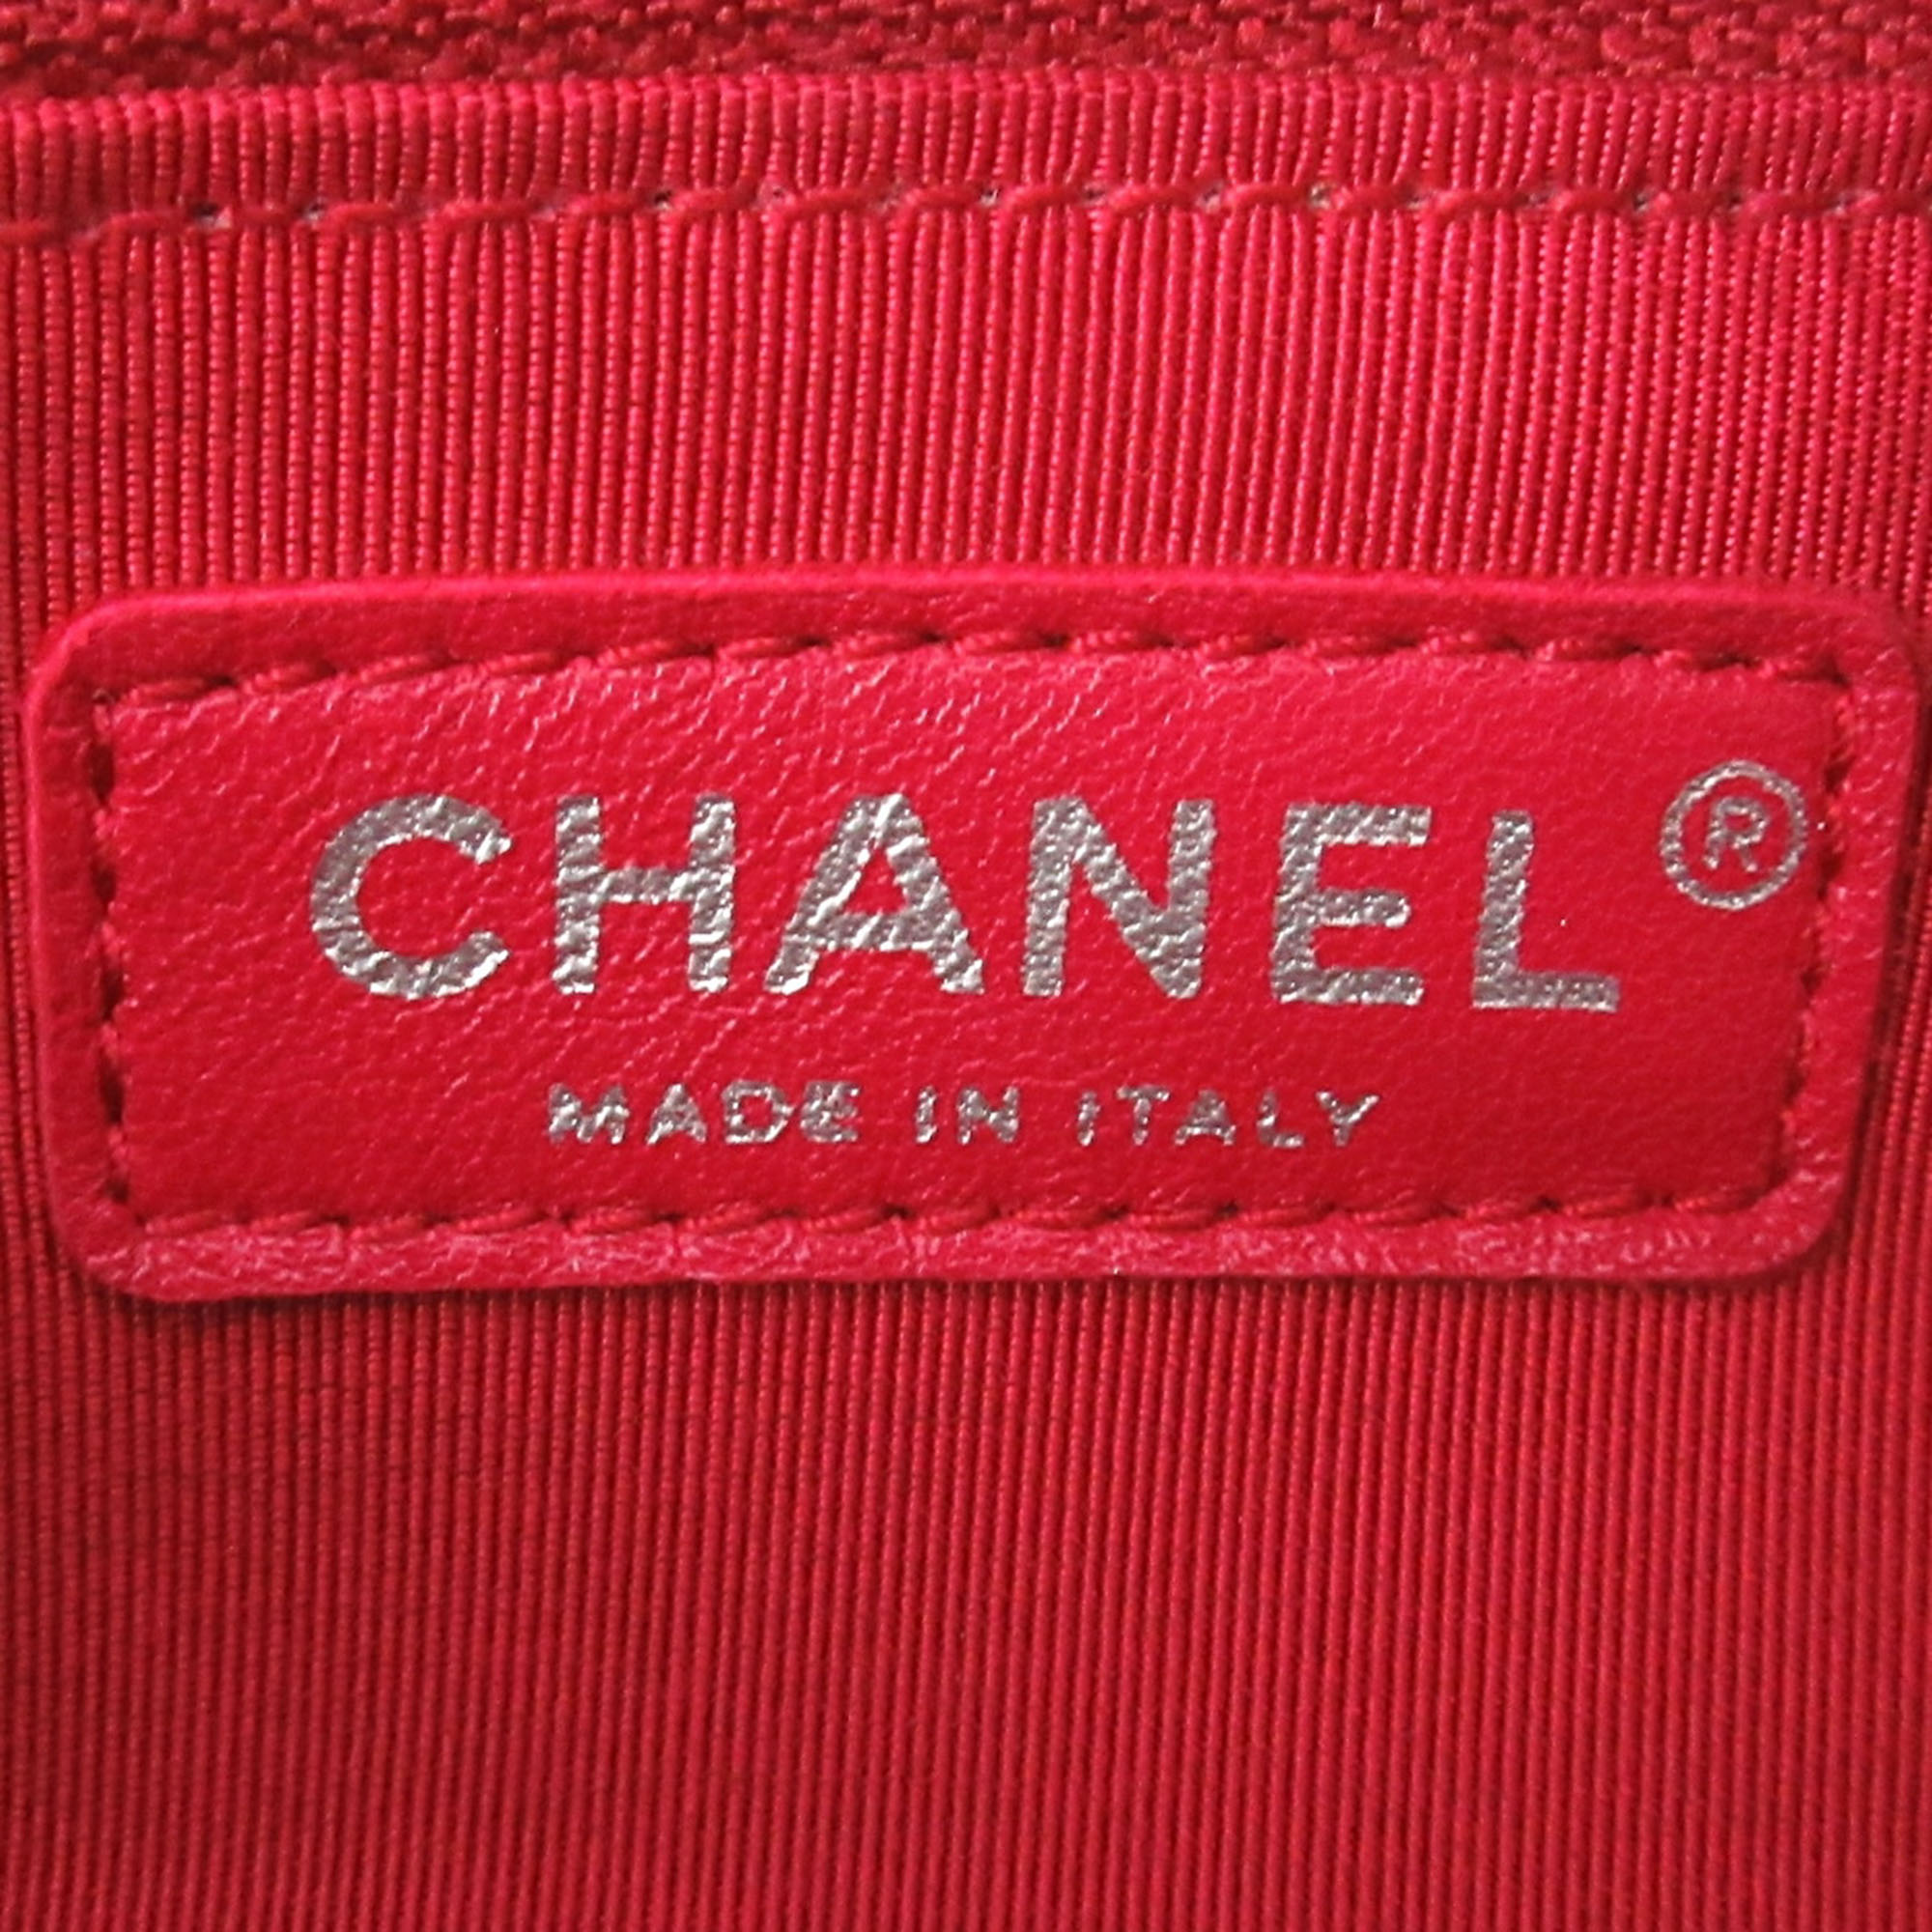 Chanel White Leather Gabrielle Shoulder Bag